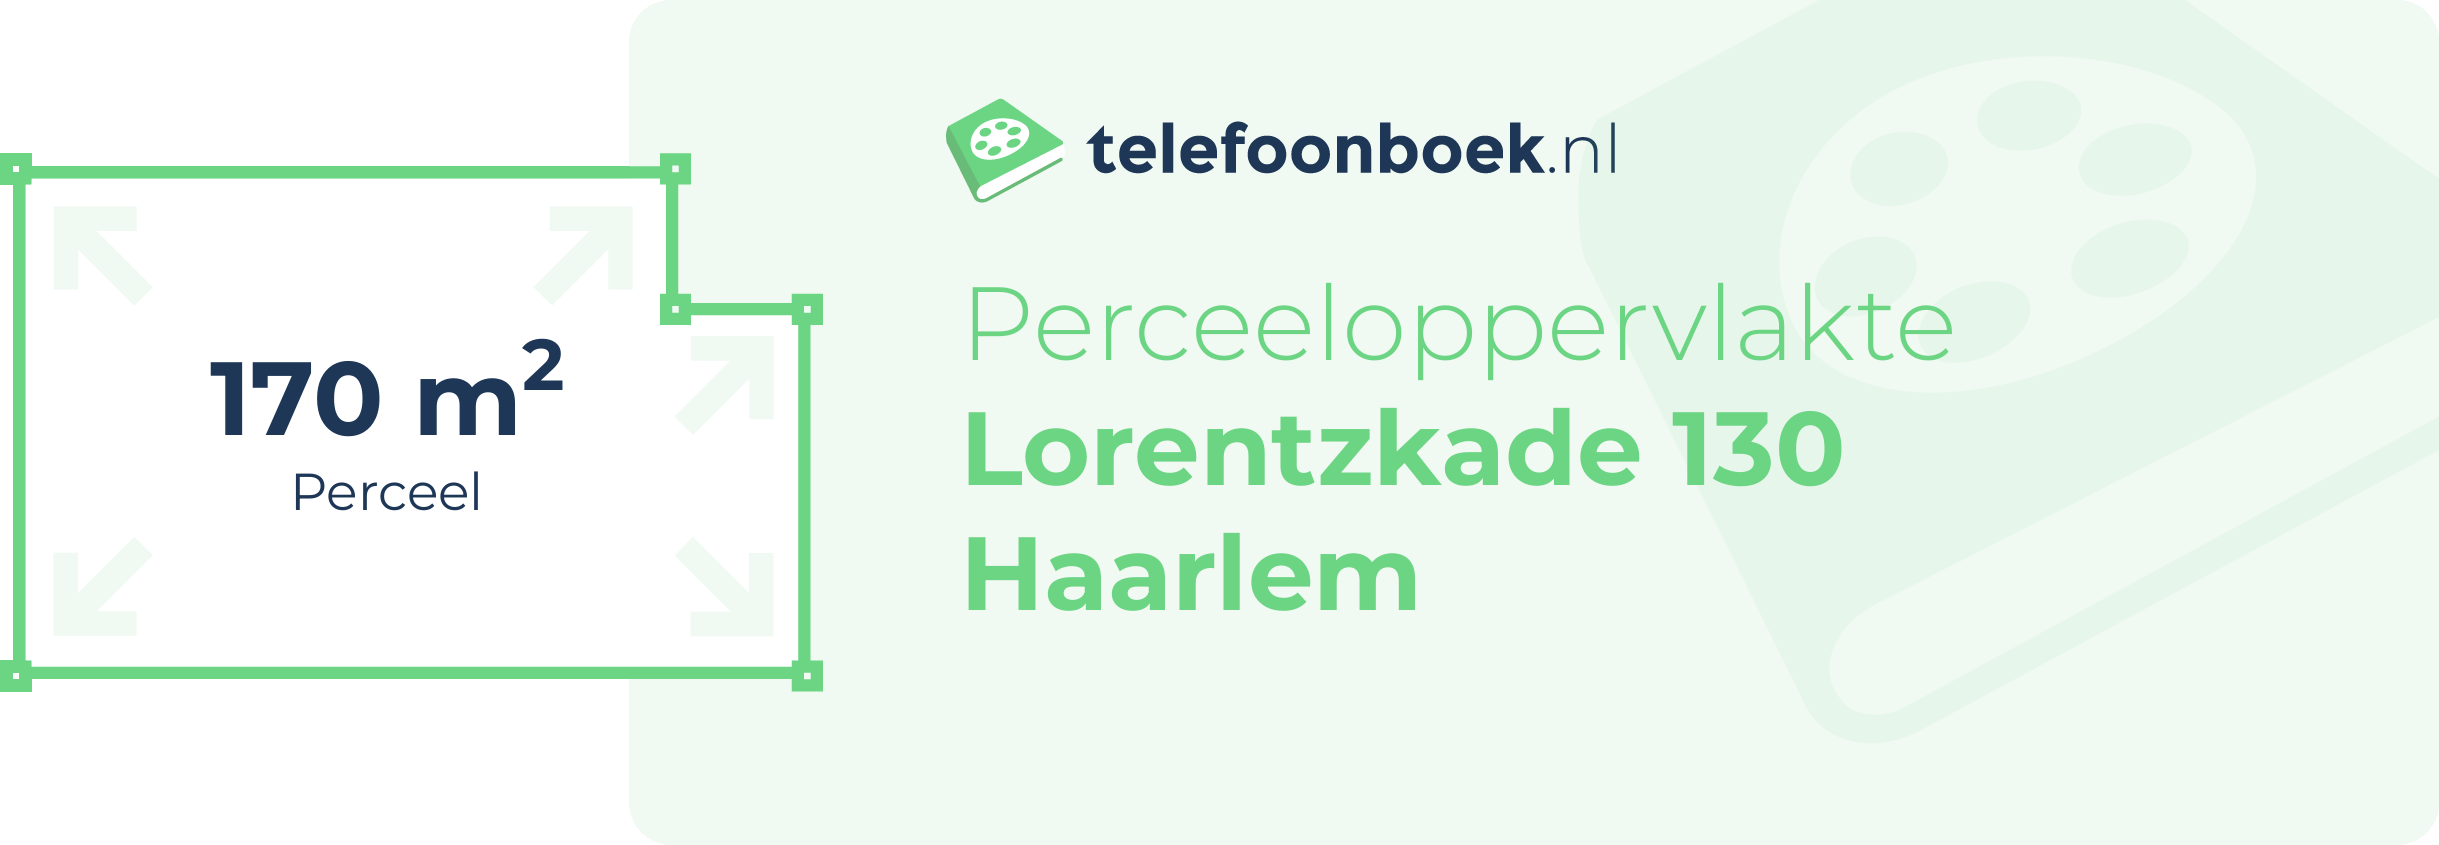 Perceeloppervlakte Lorentzkade 130 Haarlem